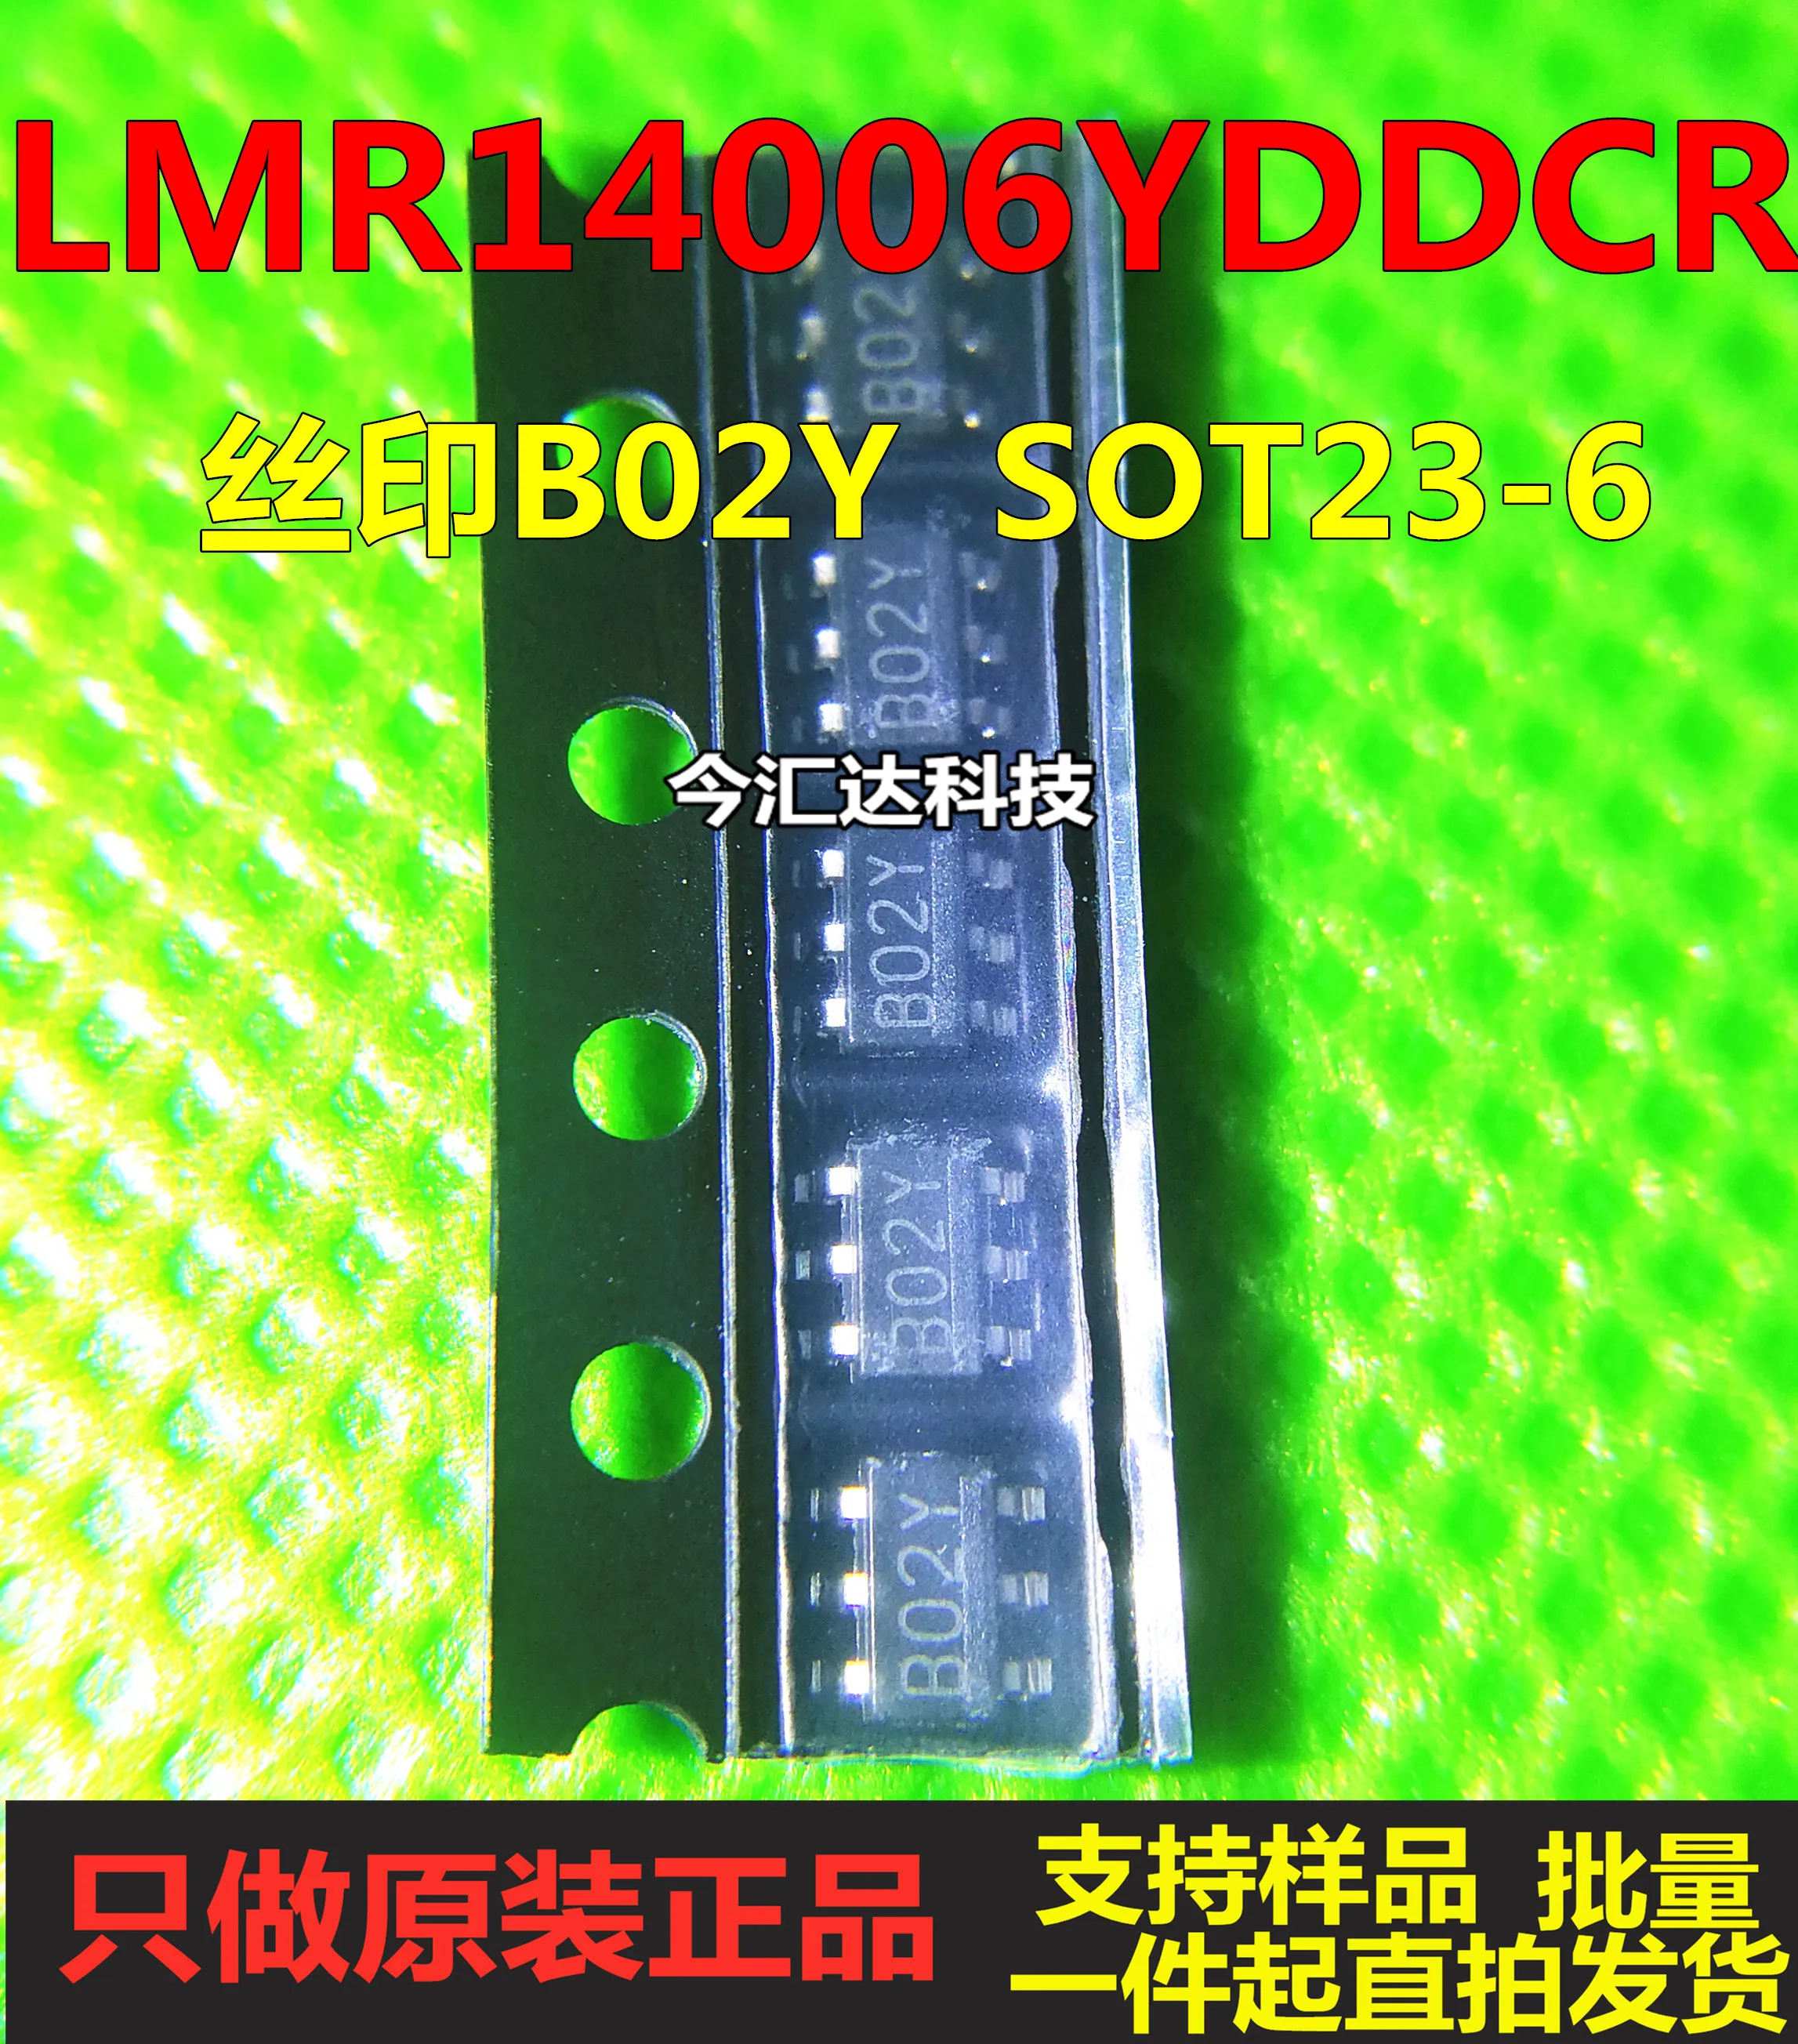 

30pcs original new 30pcs original new LMR14006YDDCR SOT6 screen printed B02Y 40V voltage reduction and stabilization chip